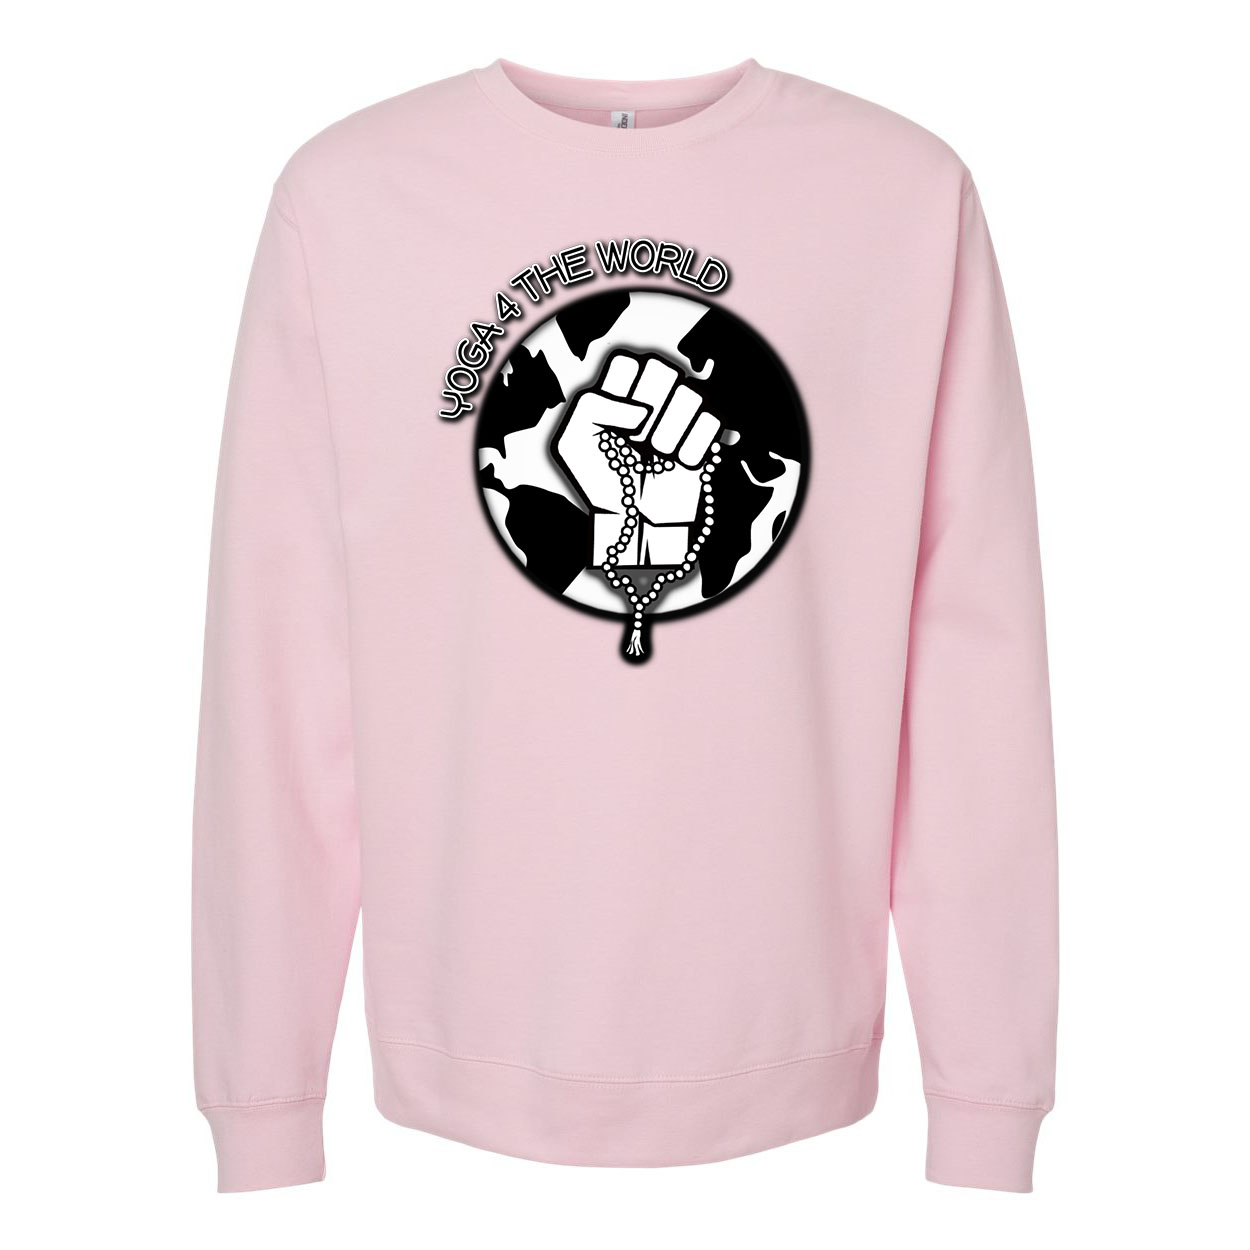 Yoga4TheWorld Light Pink Crewneck Sweatshirt